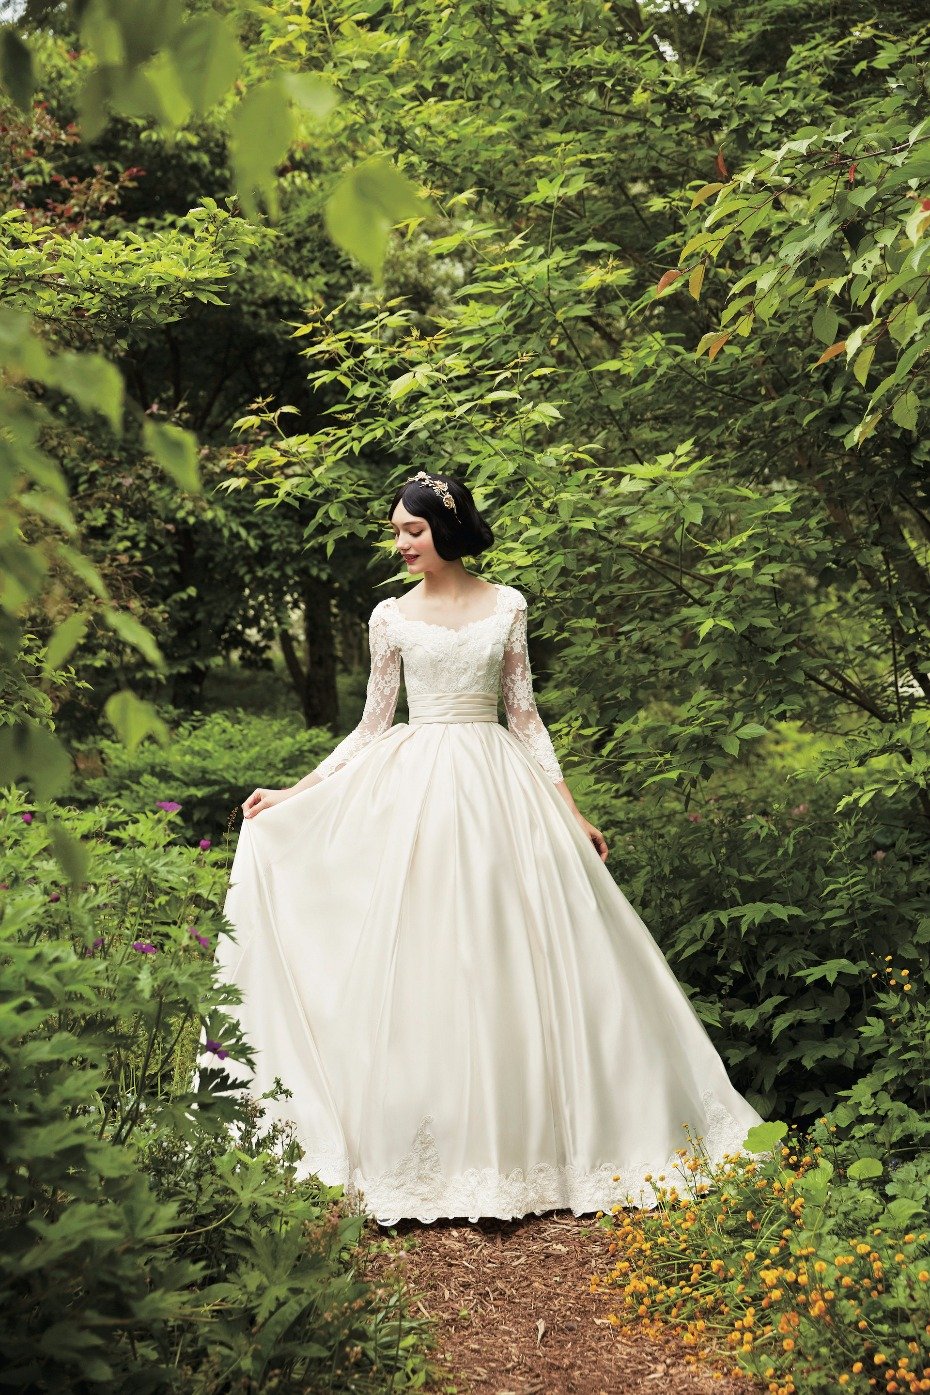 Have Disney dressâ¦ will wait for Prince Charming. Can I renew my vows just to wear one of these princess gowns?